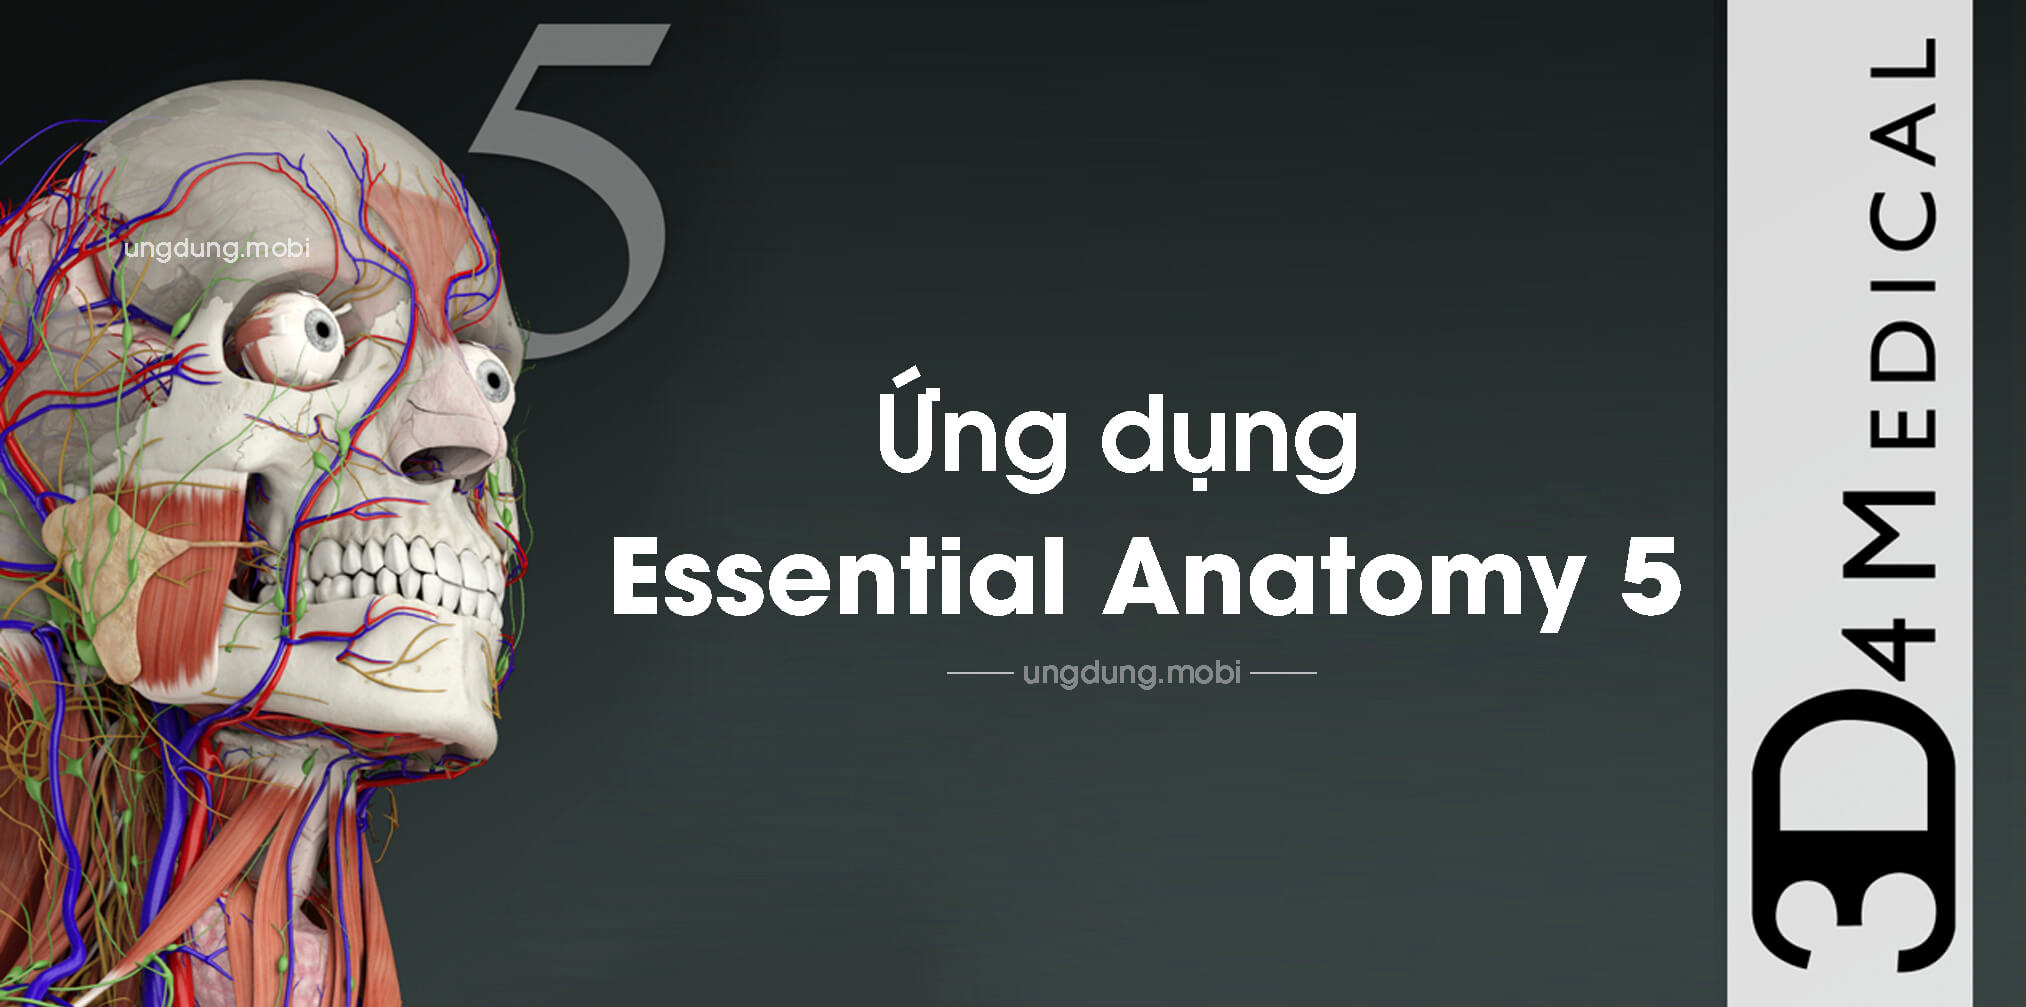 ung dung Essential Anatomy 5